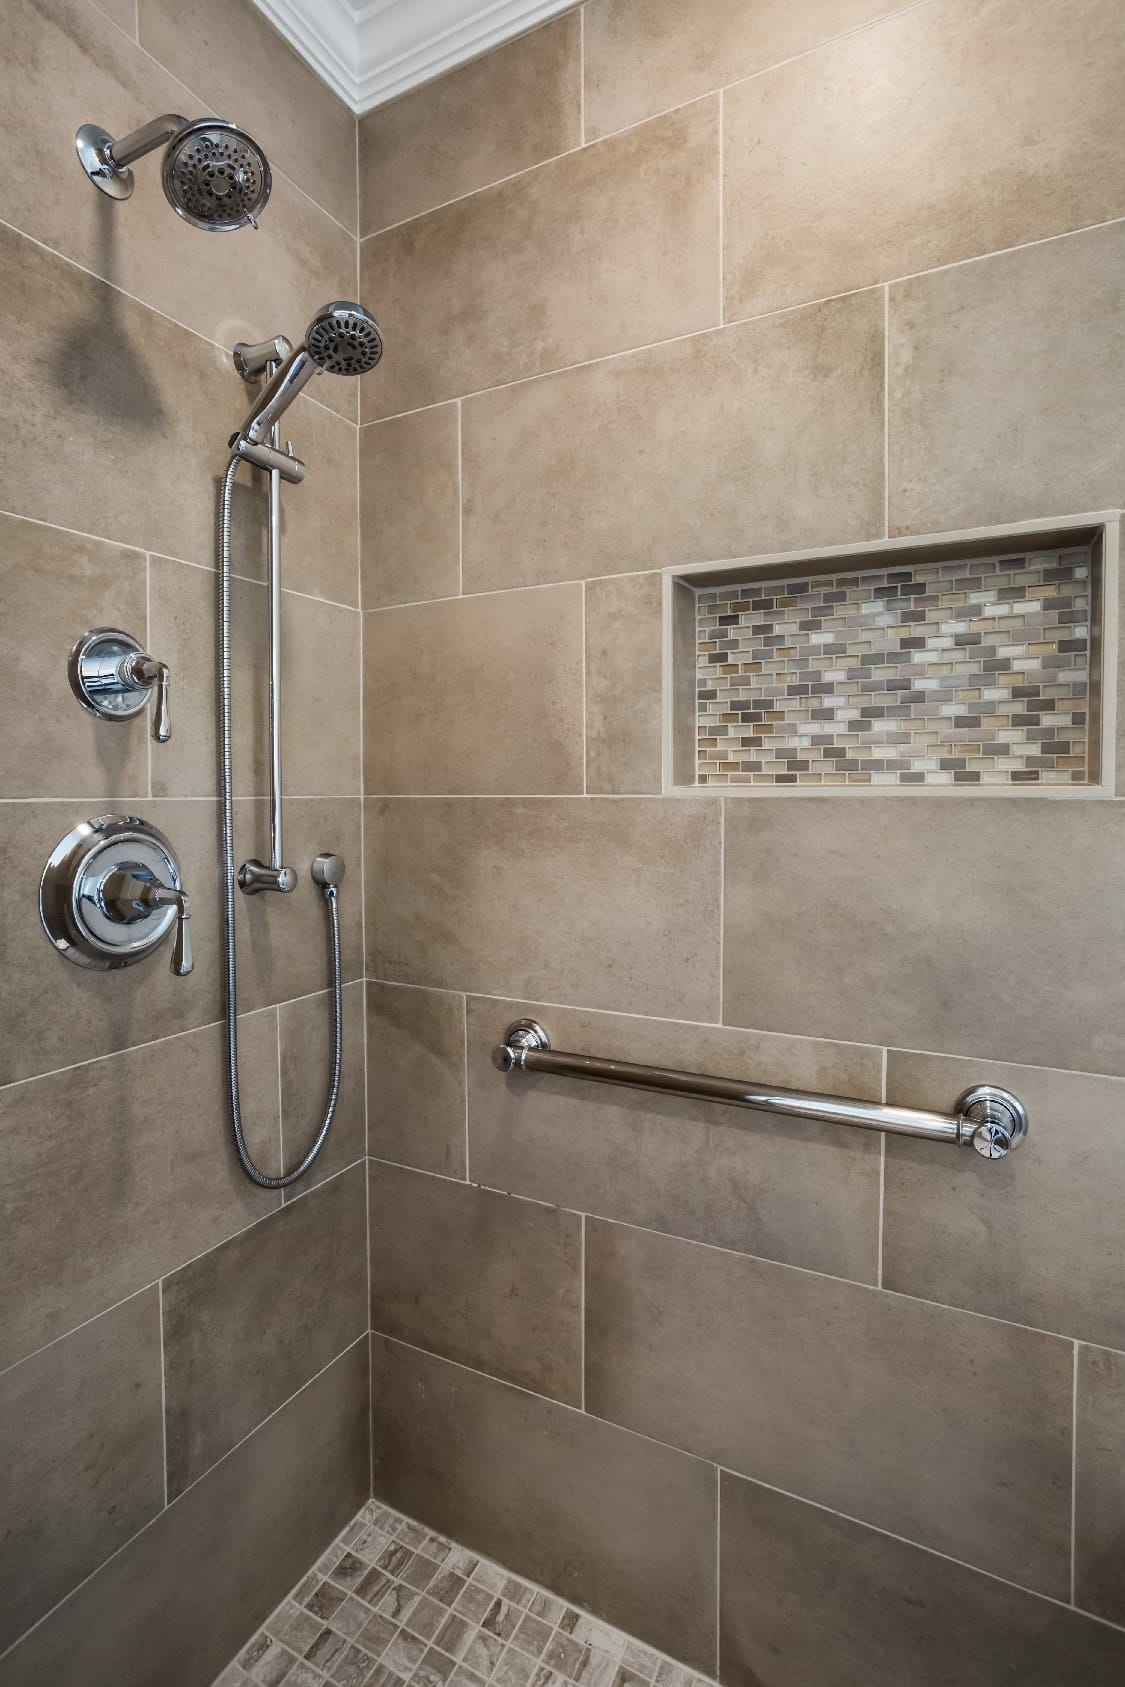 Woodbridge Primary Bathroom Remodel with MSI Capella Sand tile walls and tile floor in MSI Bernini Bianco